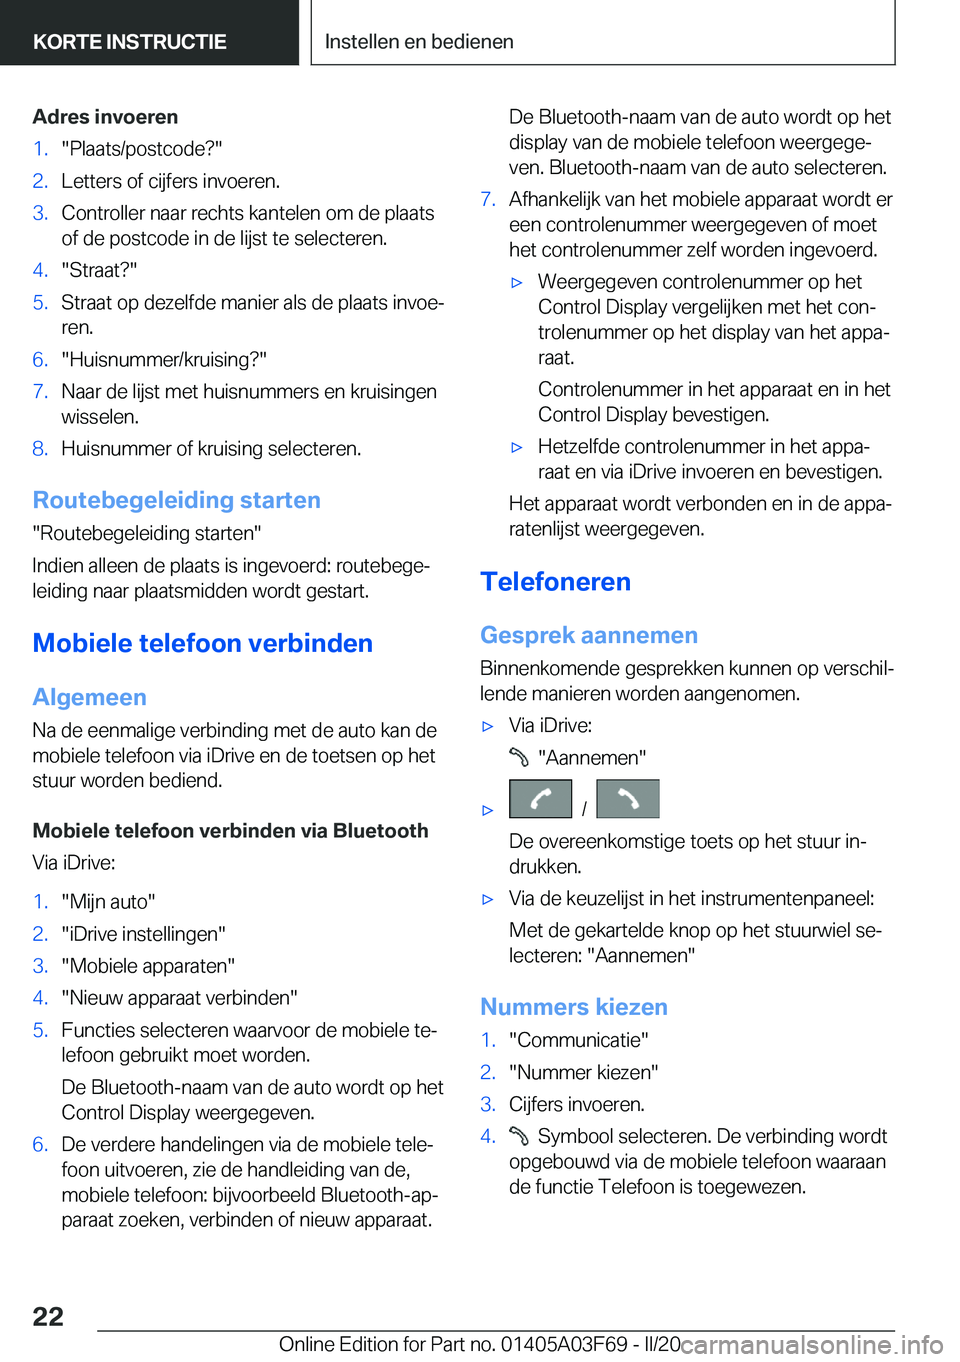 BMW 3 SERIES 2020  Instructieboekjes (in Dutch) �A�d�r�e�s��i�n�v�o�e�r�e�n�1�.��P�l�a�a�t�s�/�p�o�s�t�c�o�d�e� ��2�.�L�e�t�t�e�r�s��o�f��c�i�j�f�e�r�s��i�n�v�o�e�r�e�n�.�3�.�C�o�n�t�r�o�l�l�e�r��n�a�a�r��r�e�c�h�t�s��k�a�n�t�e�l�e�n��o�m